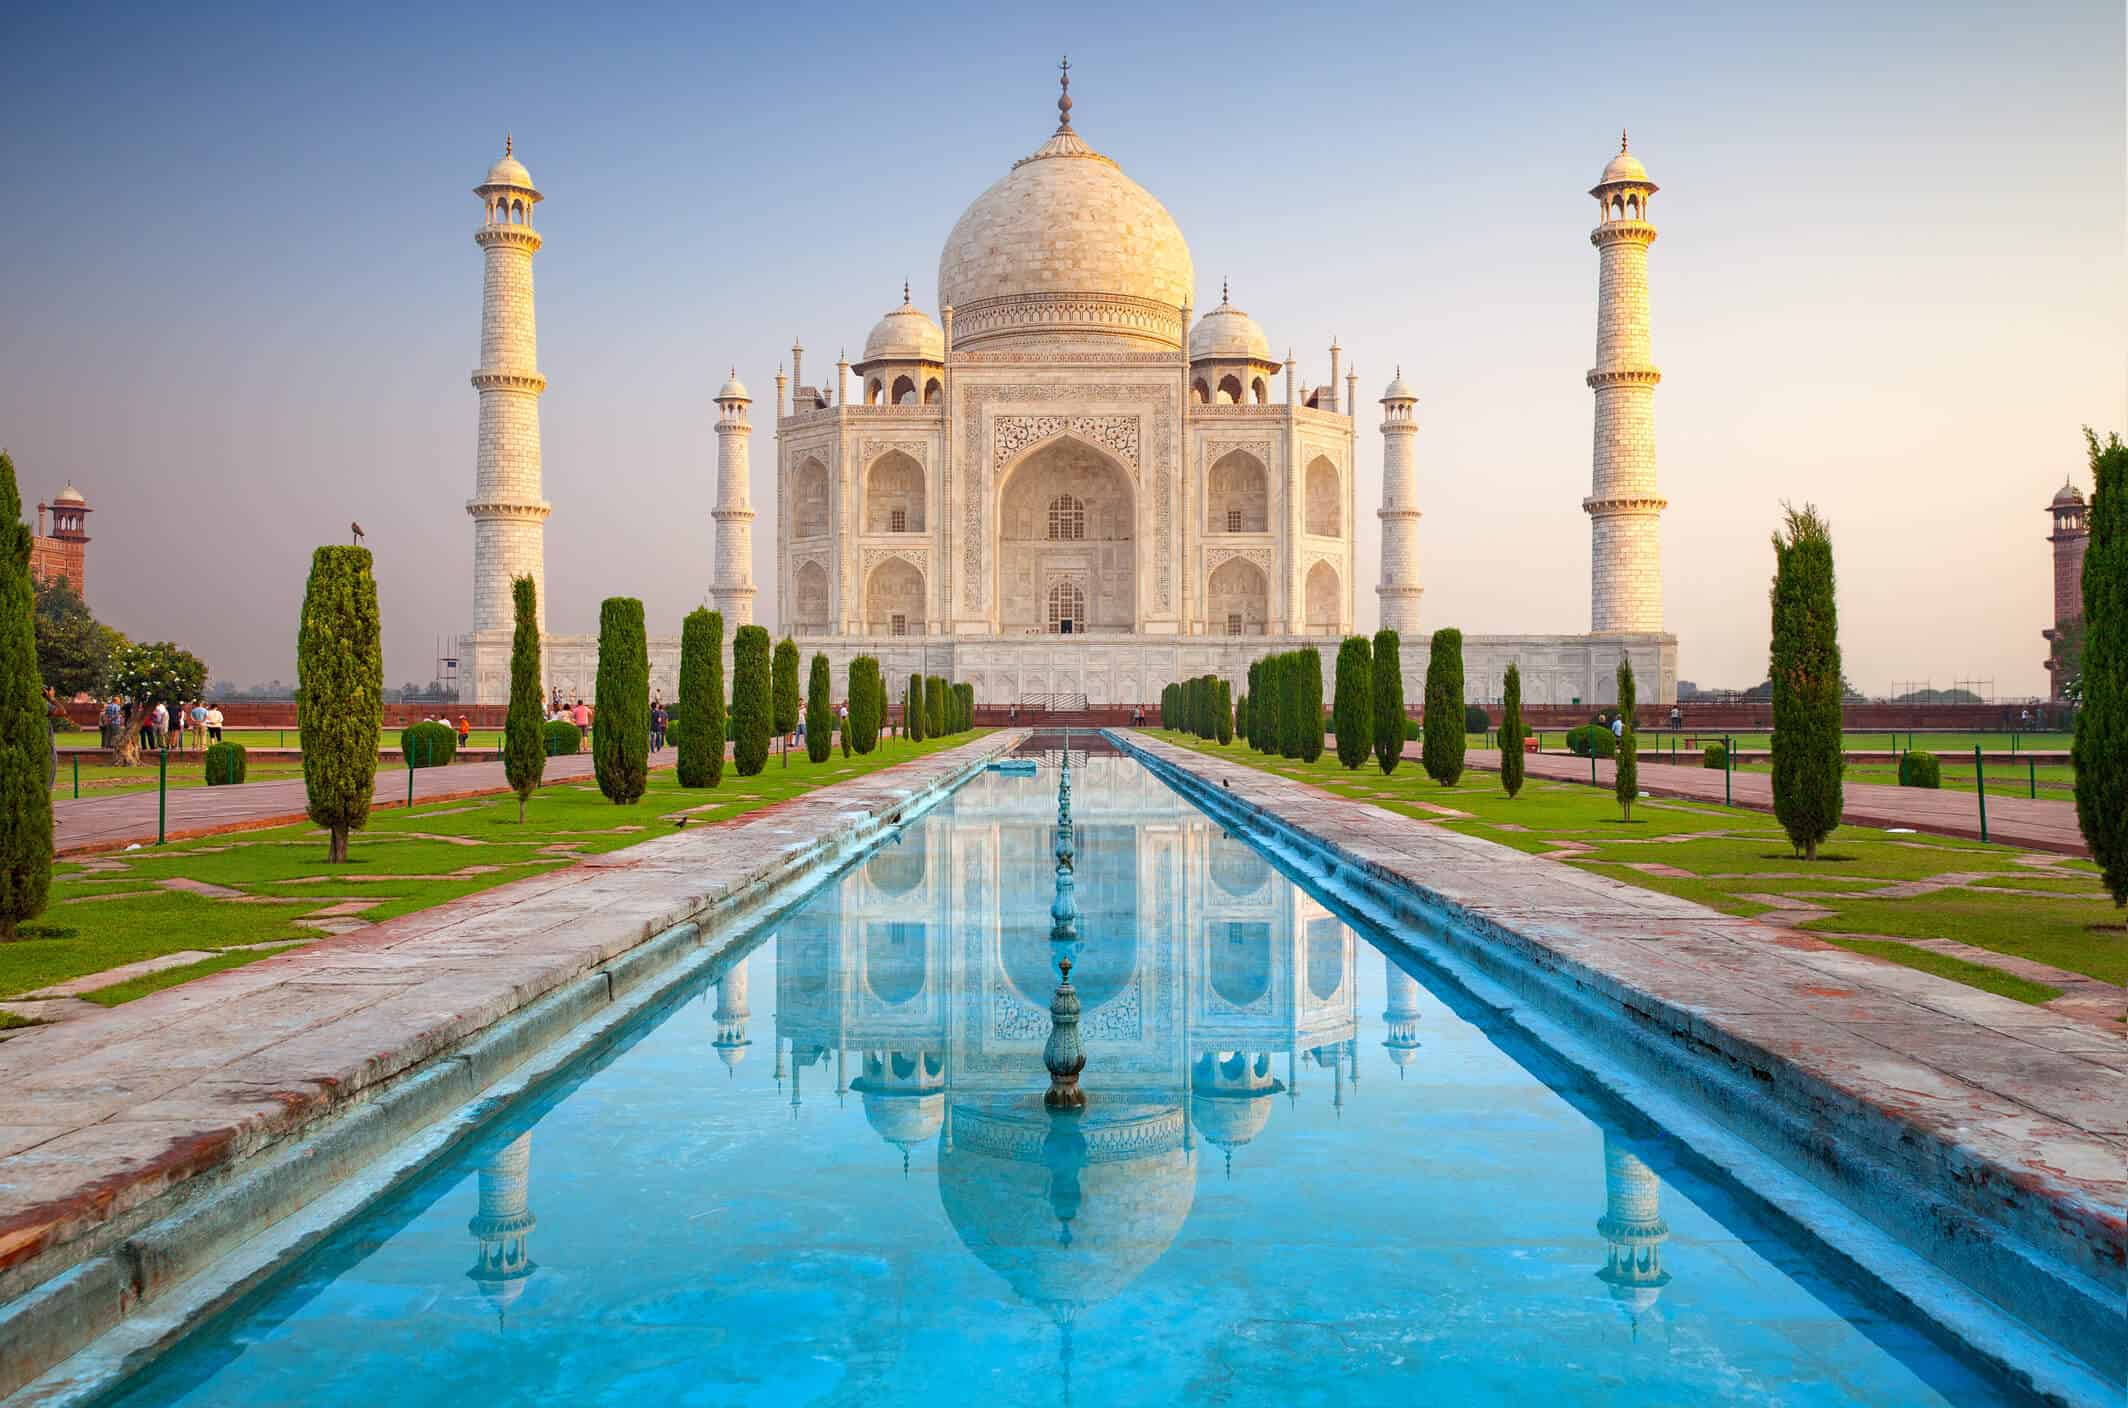 Taj Mahal is a UNESCO World Heritage site of India